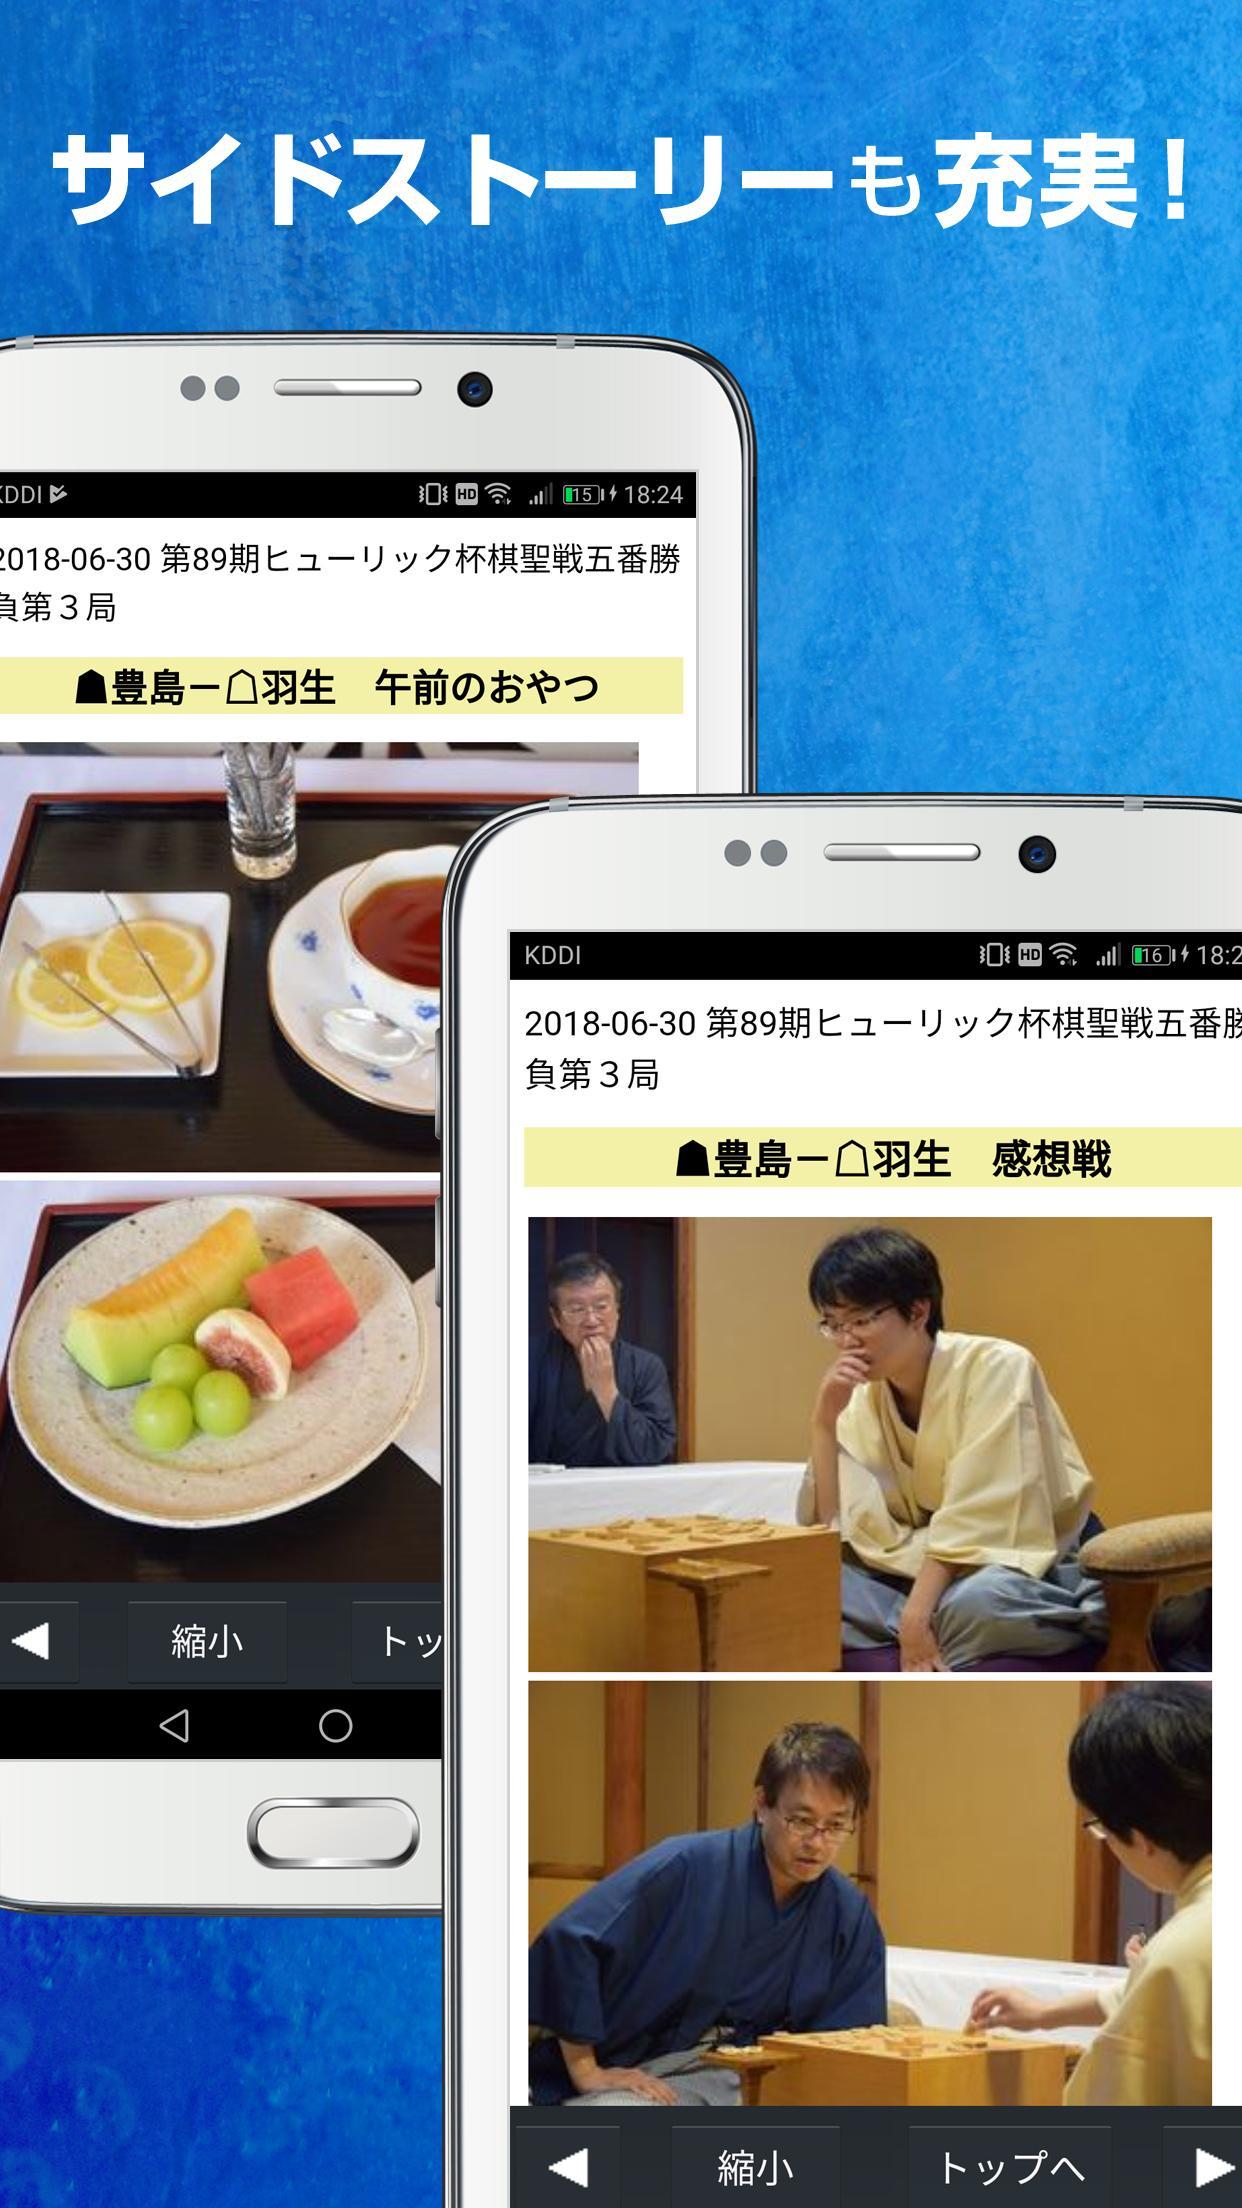 Shogi Live Subscription 2014 7.17 Screenshot 12